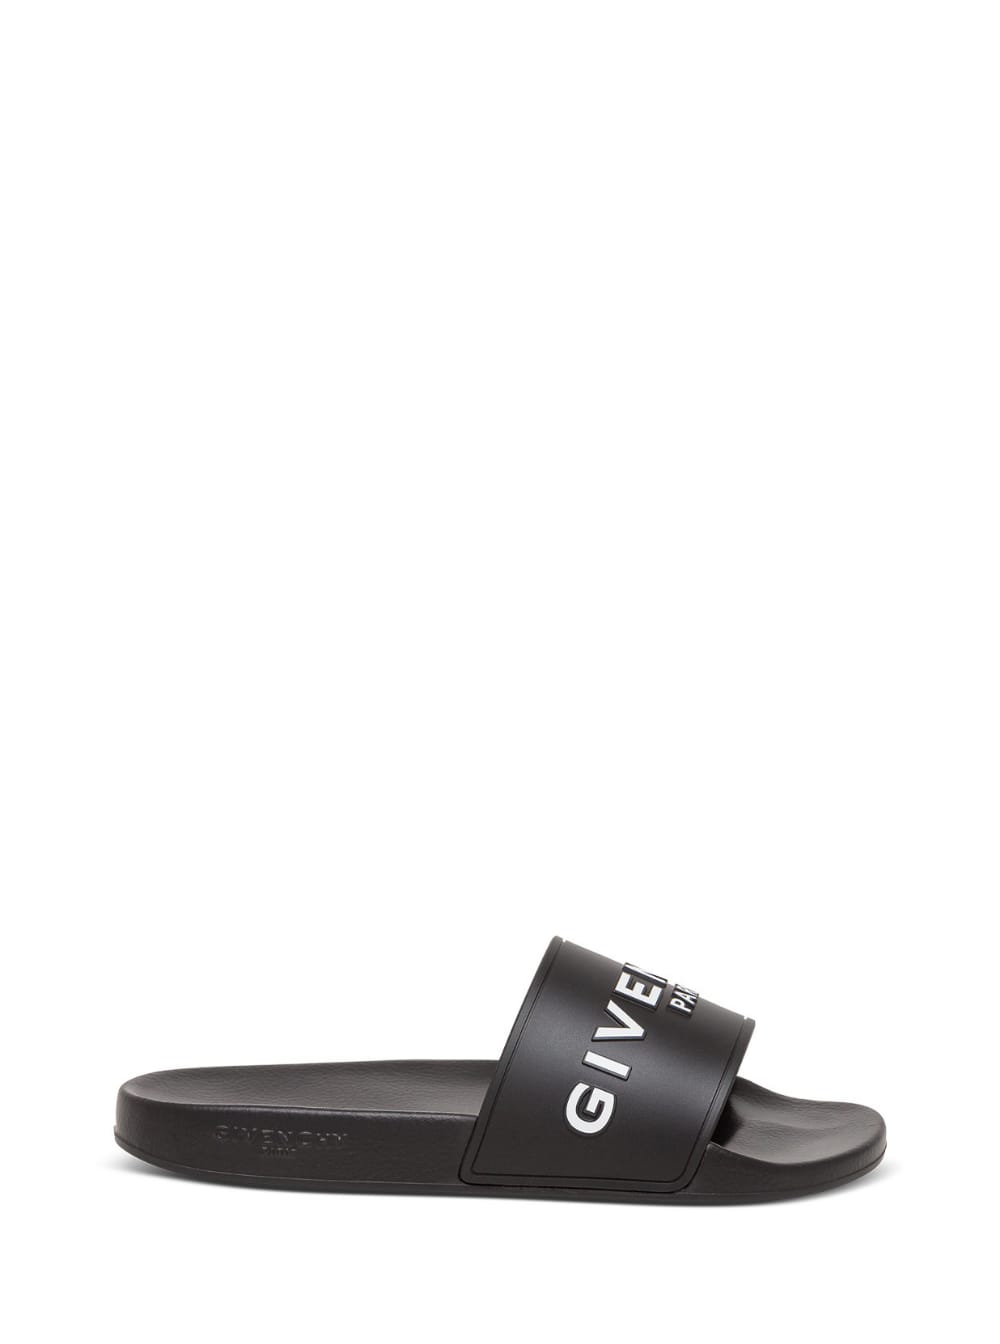 Givenchy Black Rubber Slide Sandals With Contrasting Logo